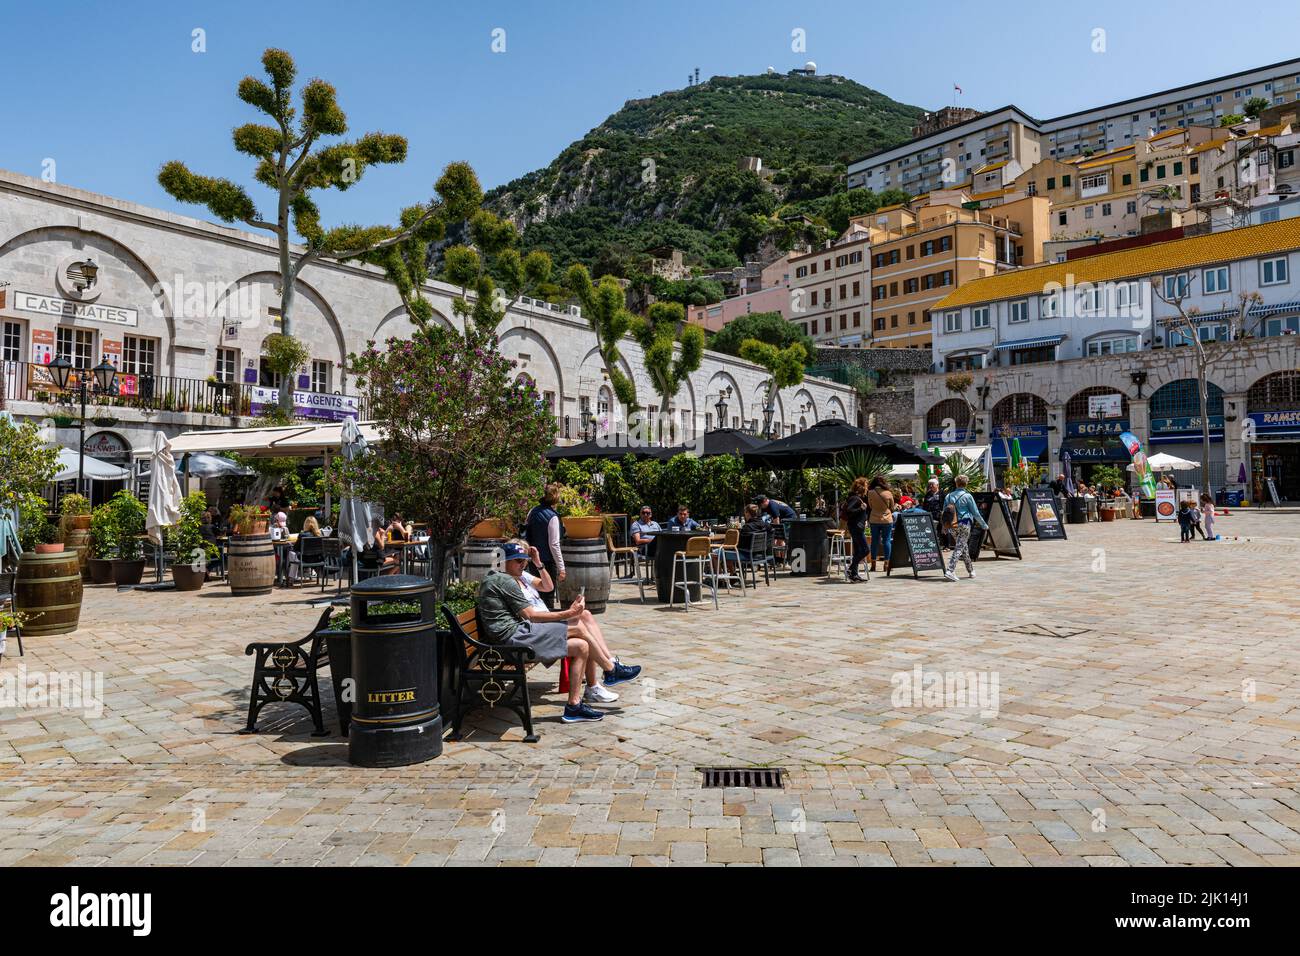 Grand Casemates Square, Gibraltar, British Overseas Territory, Europe Stock Photo